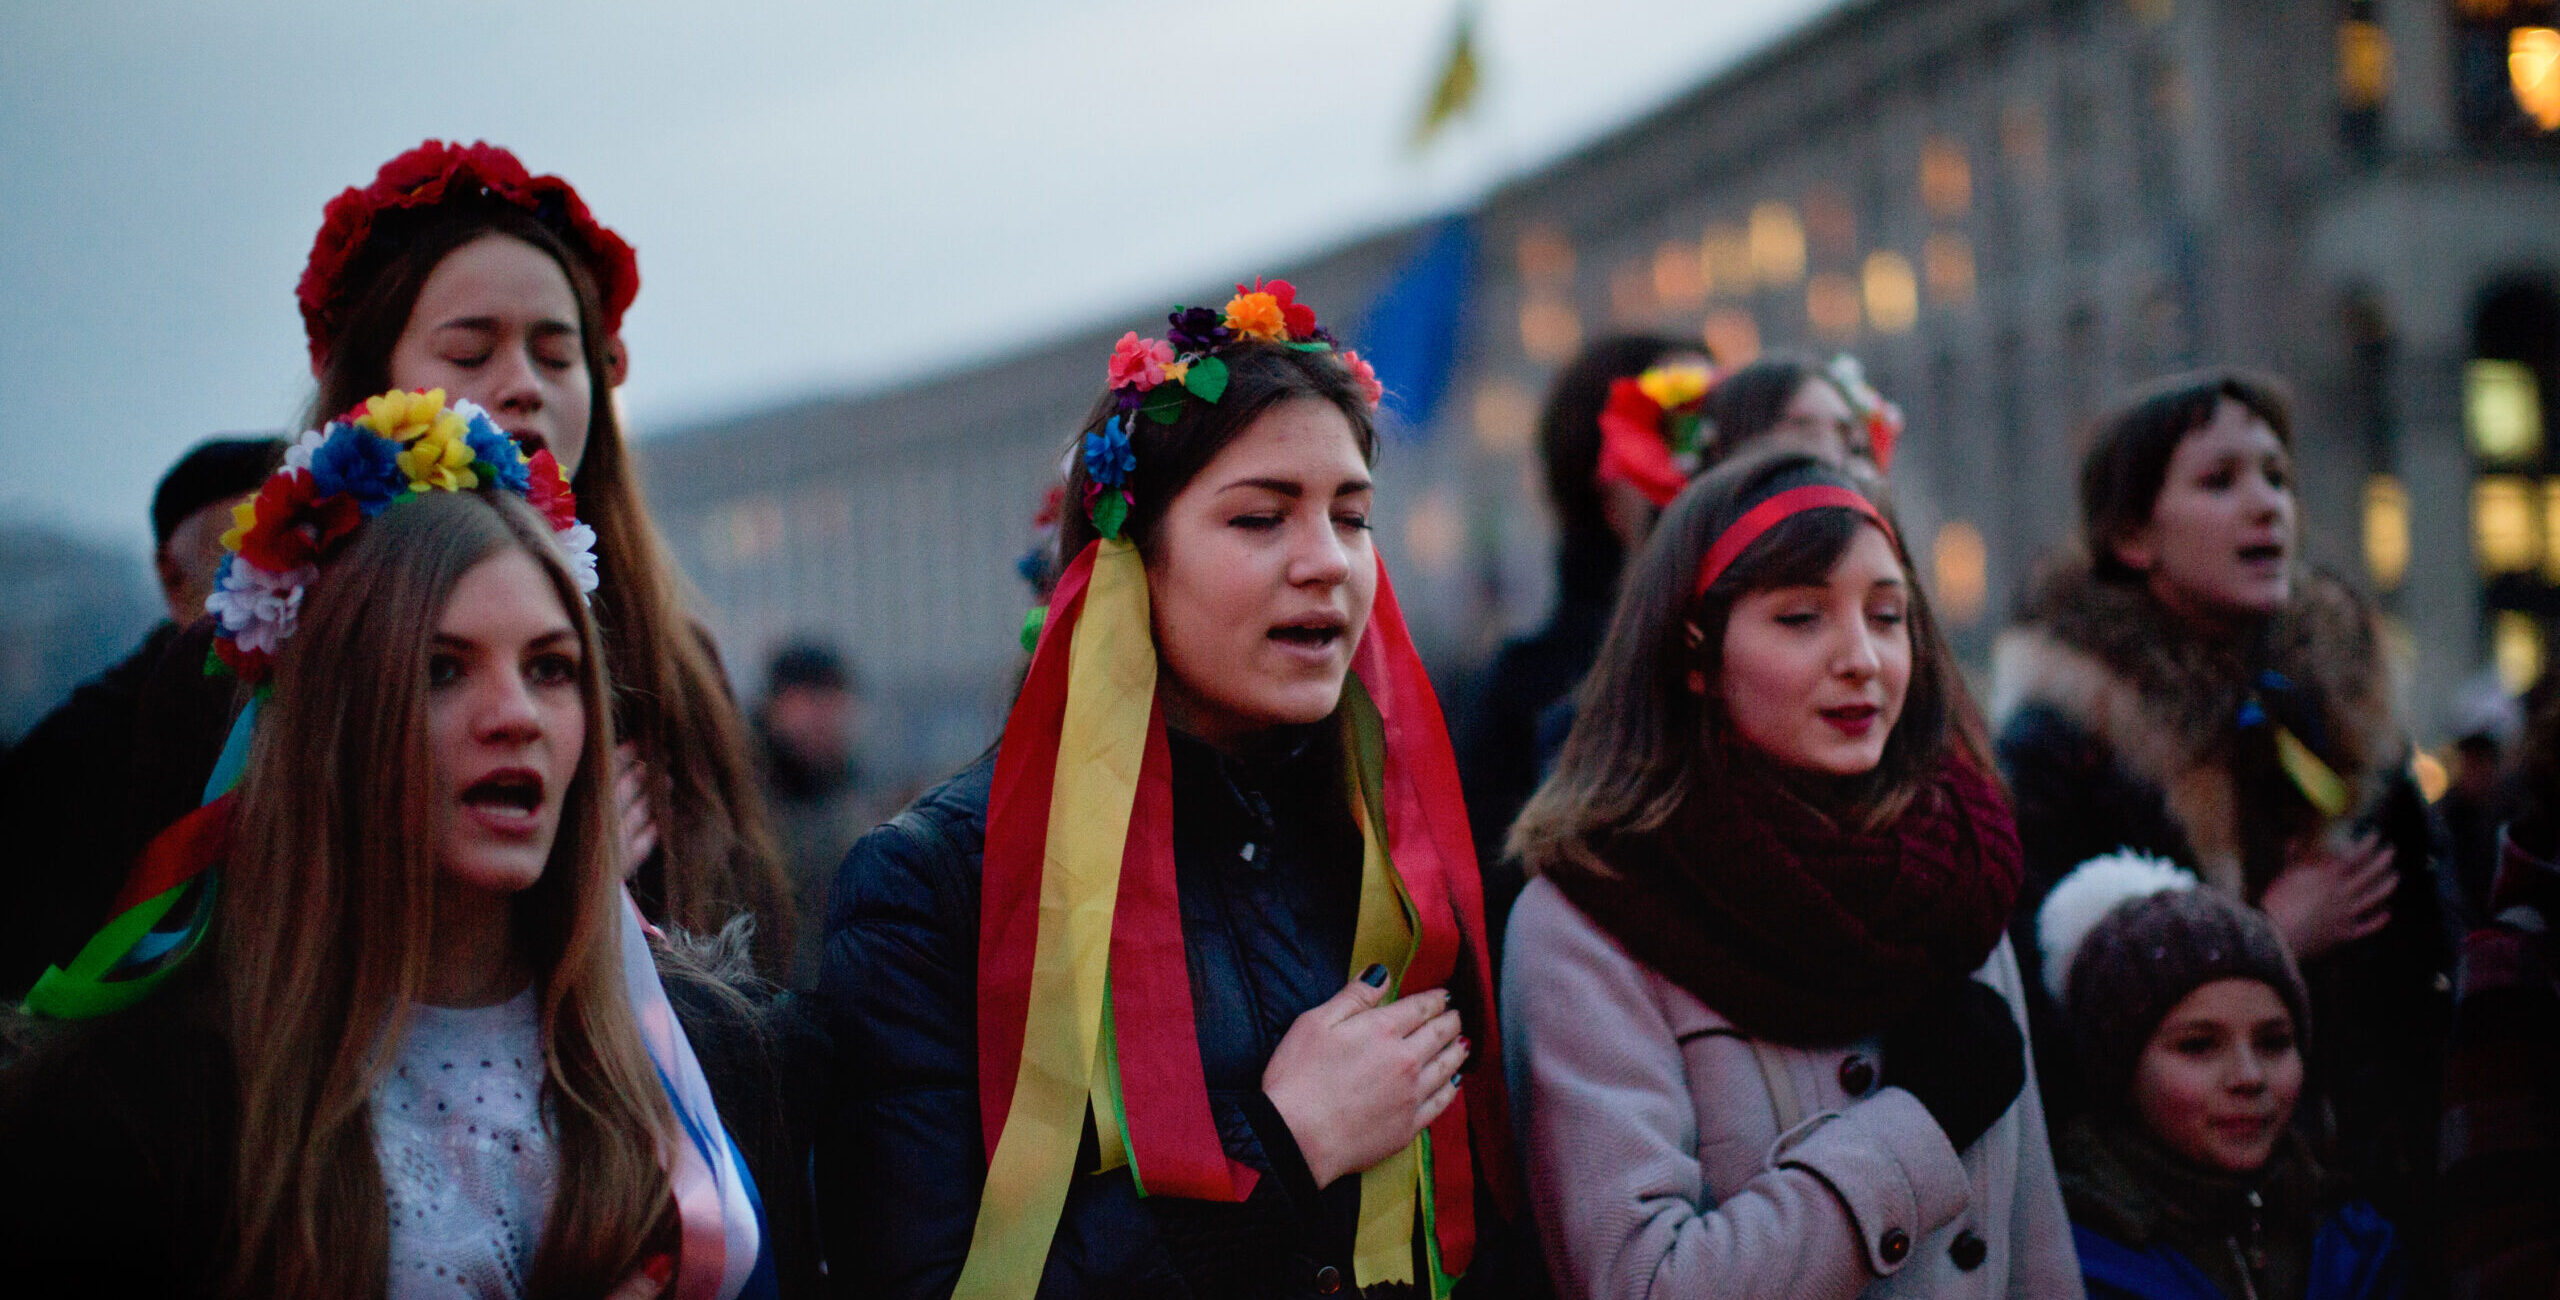 Ukrainian women sing at protest